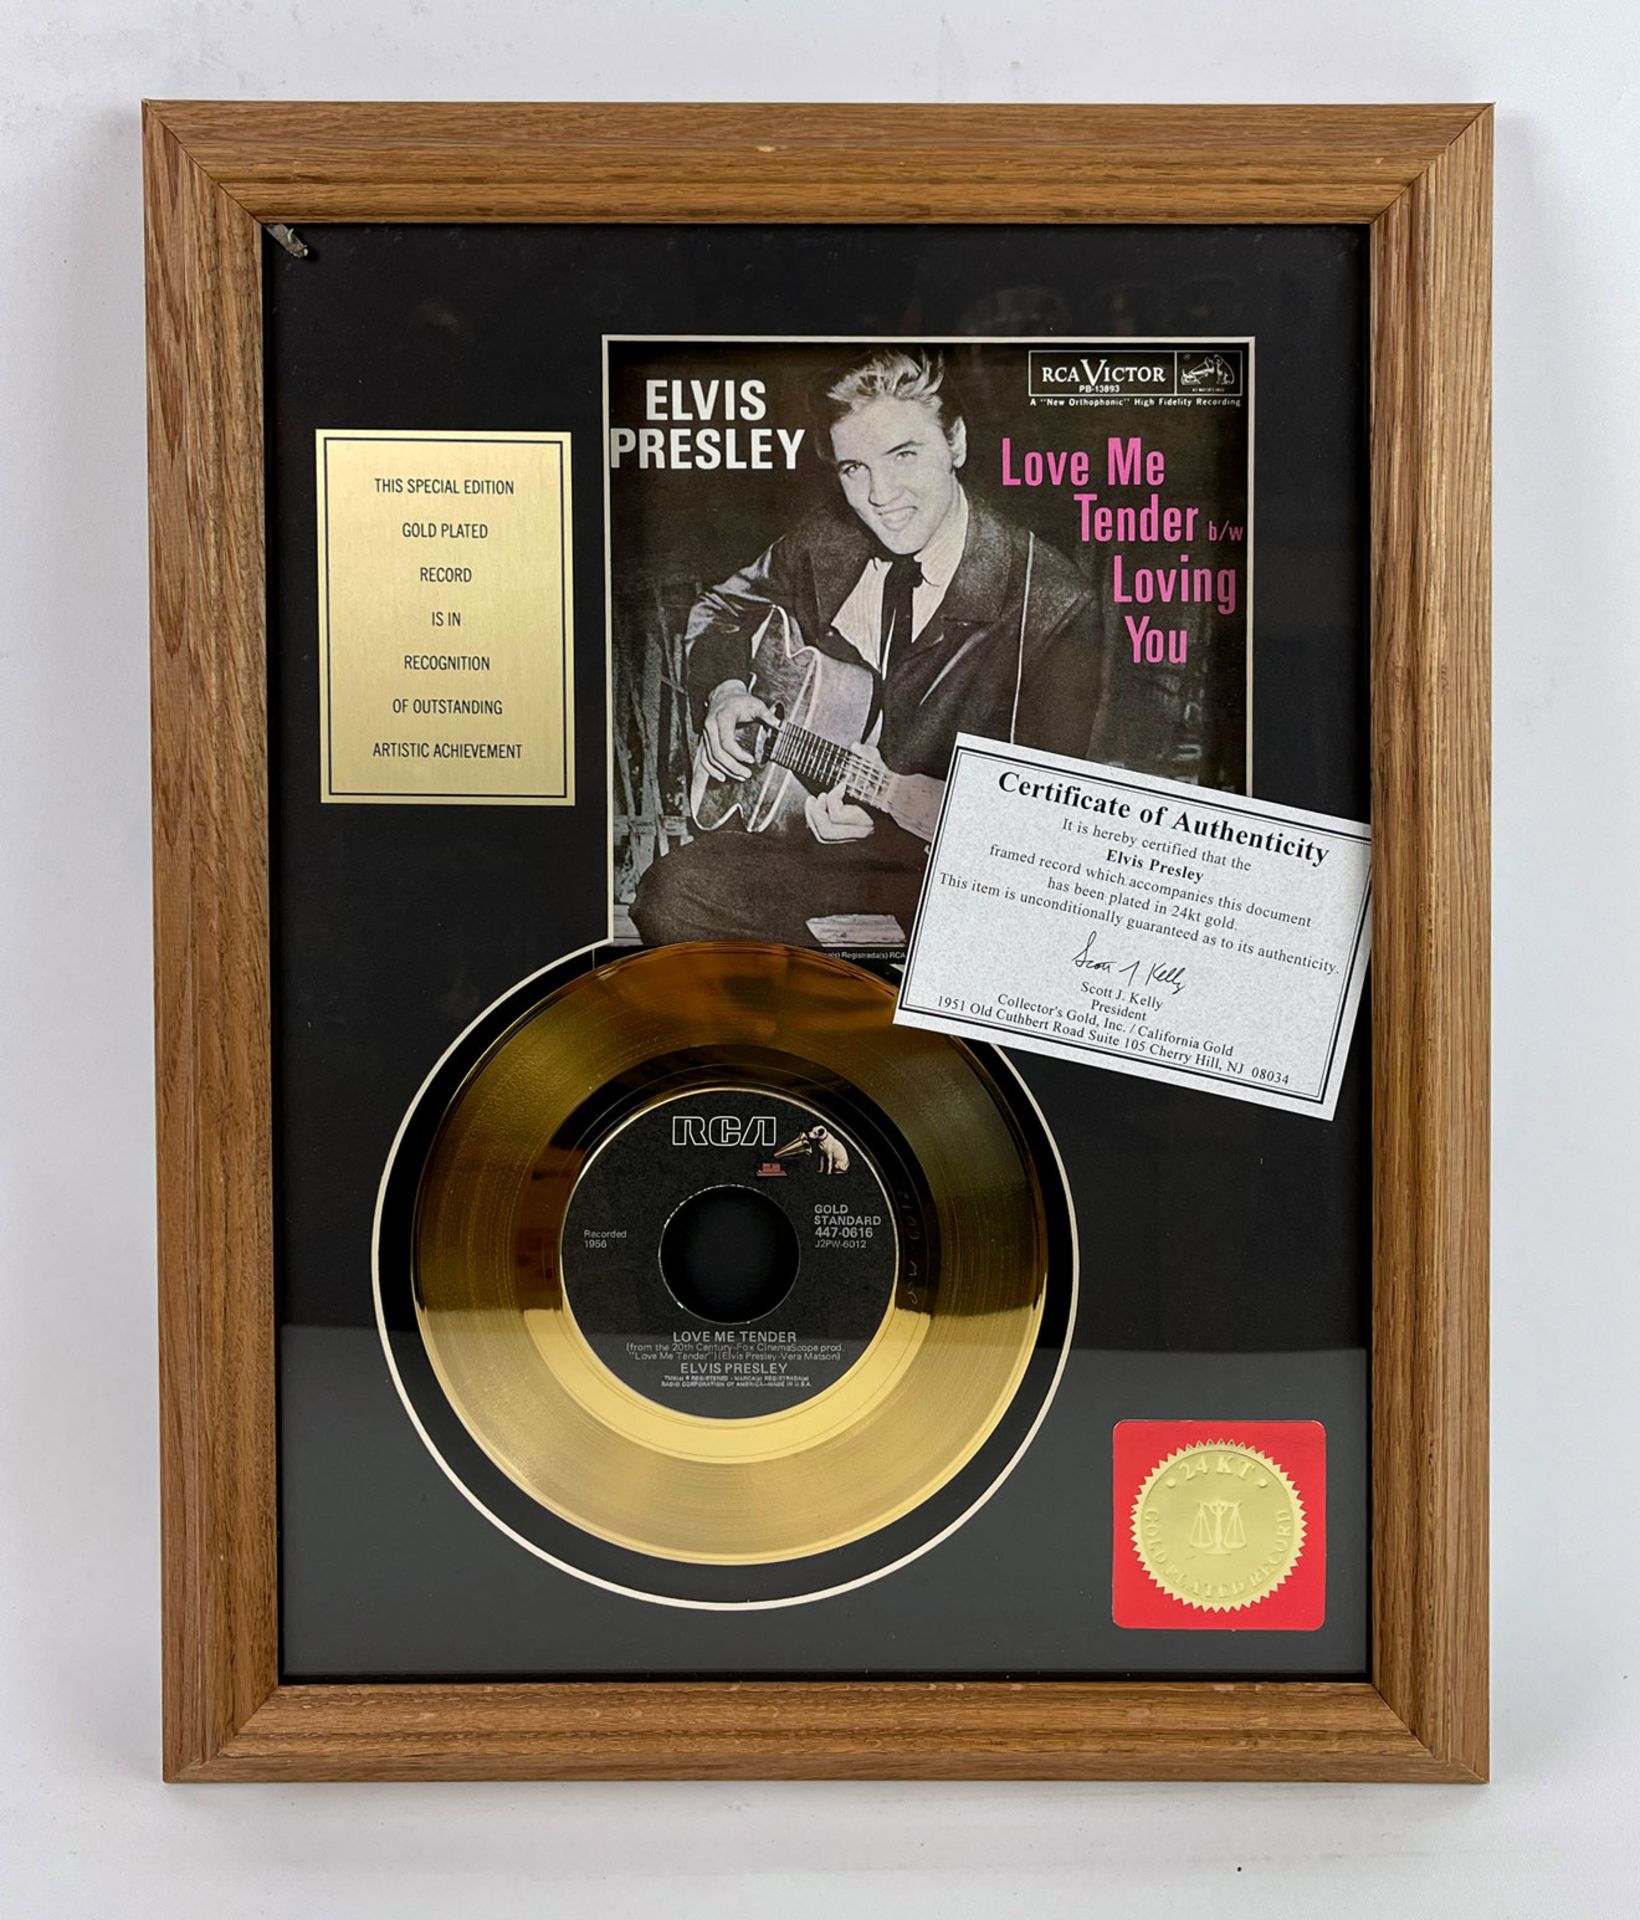 Elvis Presley Framed Golden Record "Love Me Tender"